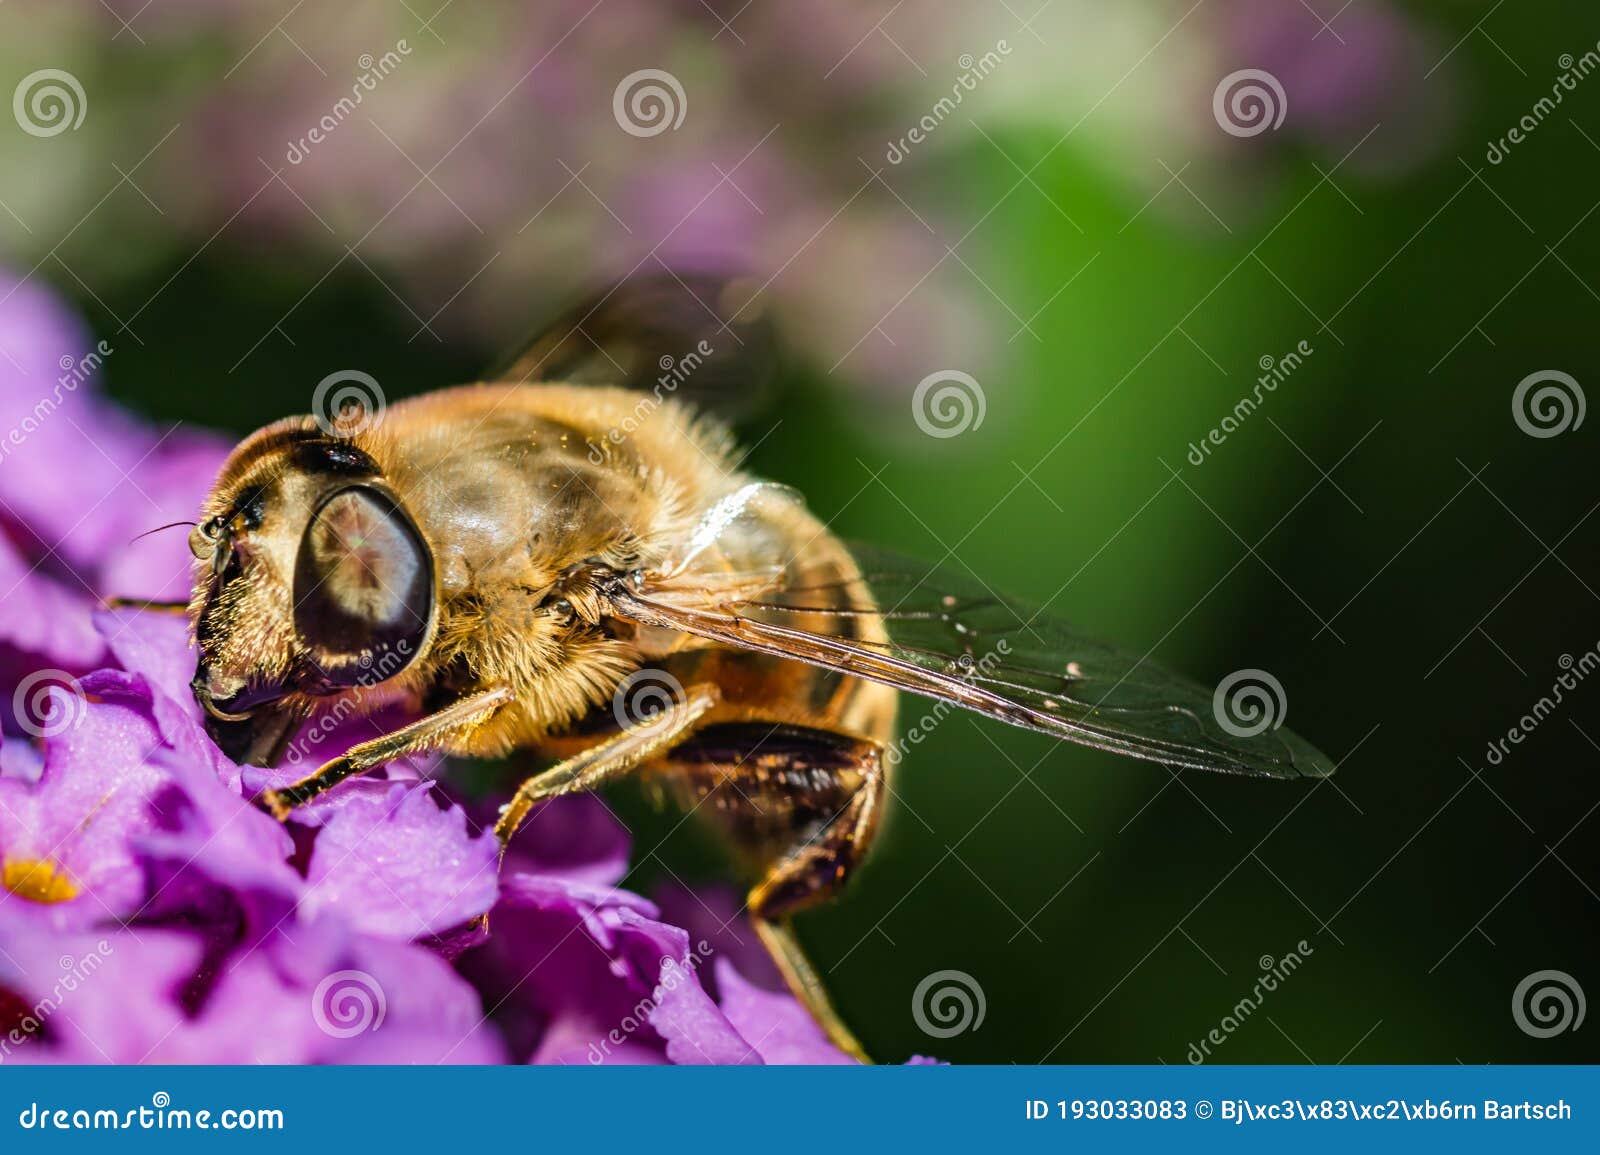 the pellucid hoverfly [volucella pellucens